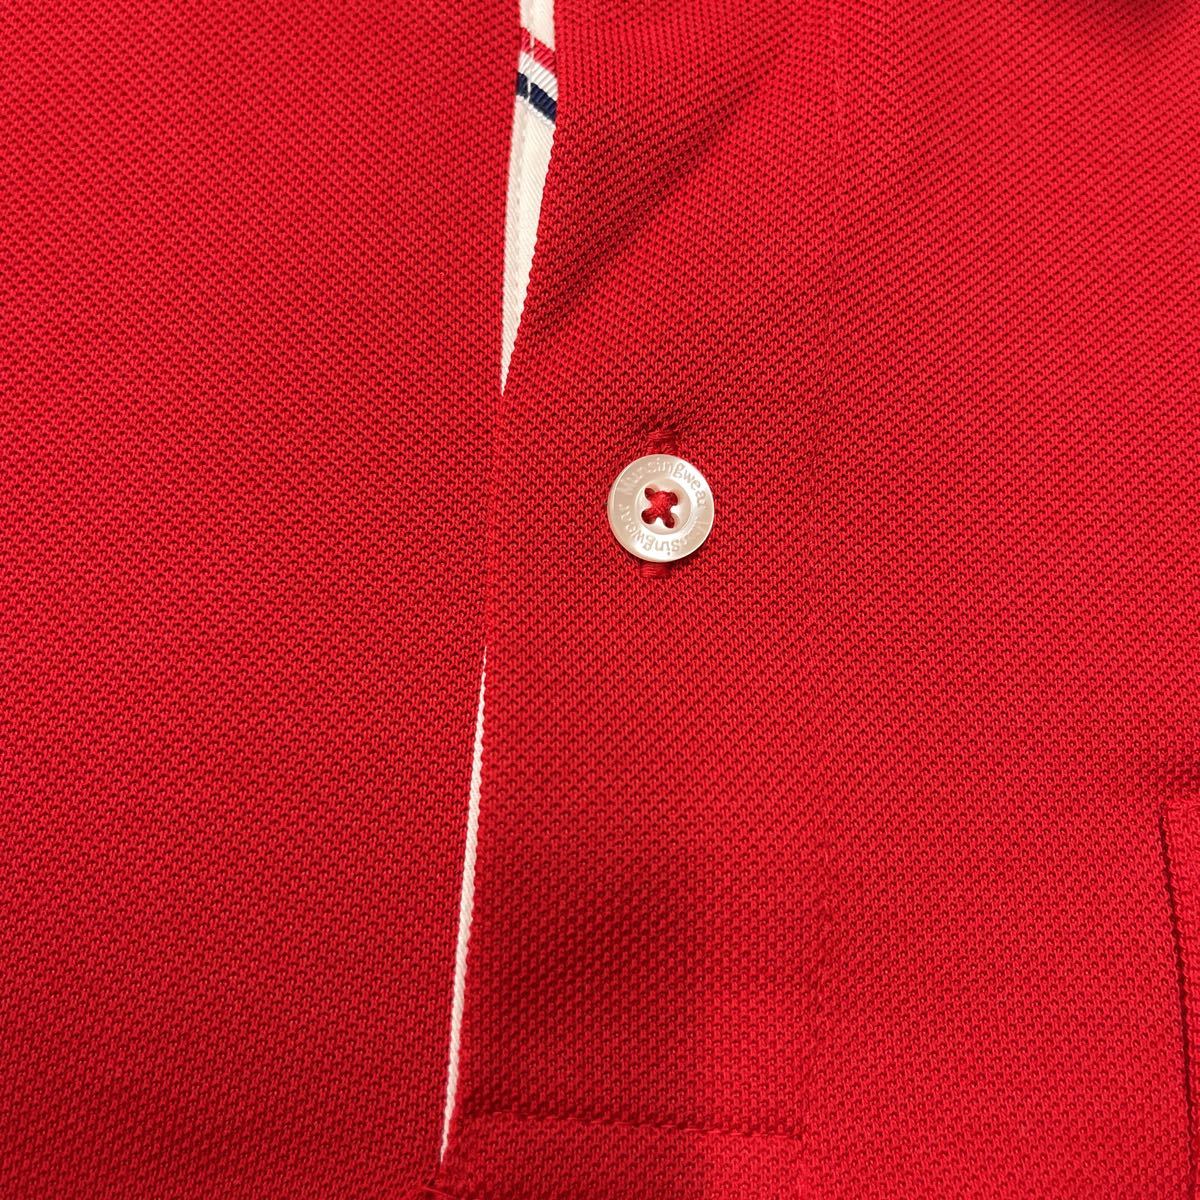 Munsingwear マンシングウェア 半袖シャツ ポロシャツ サイズL レッド 赤 メンズ トップス 日本製 MADE IN JAPAN デサント ゴルフ golfの画像5